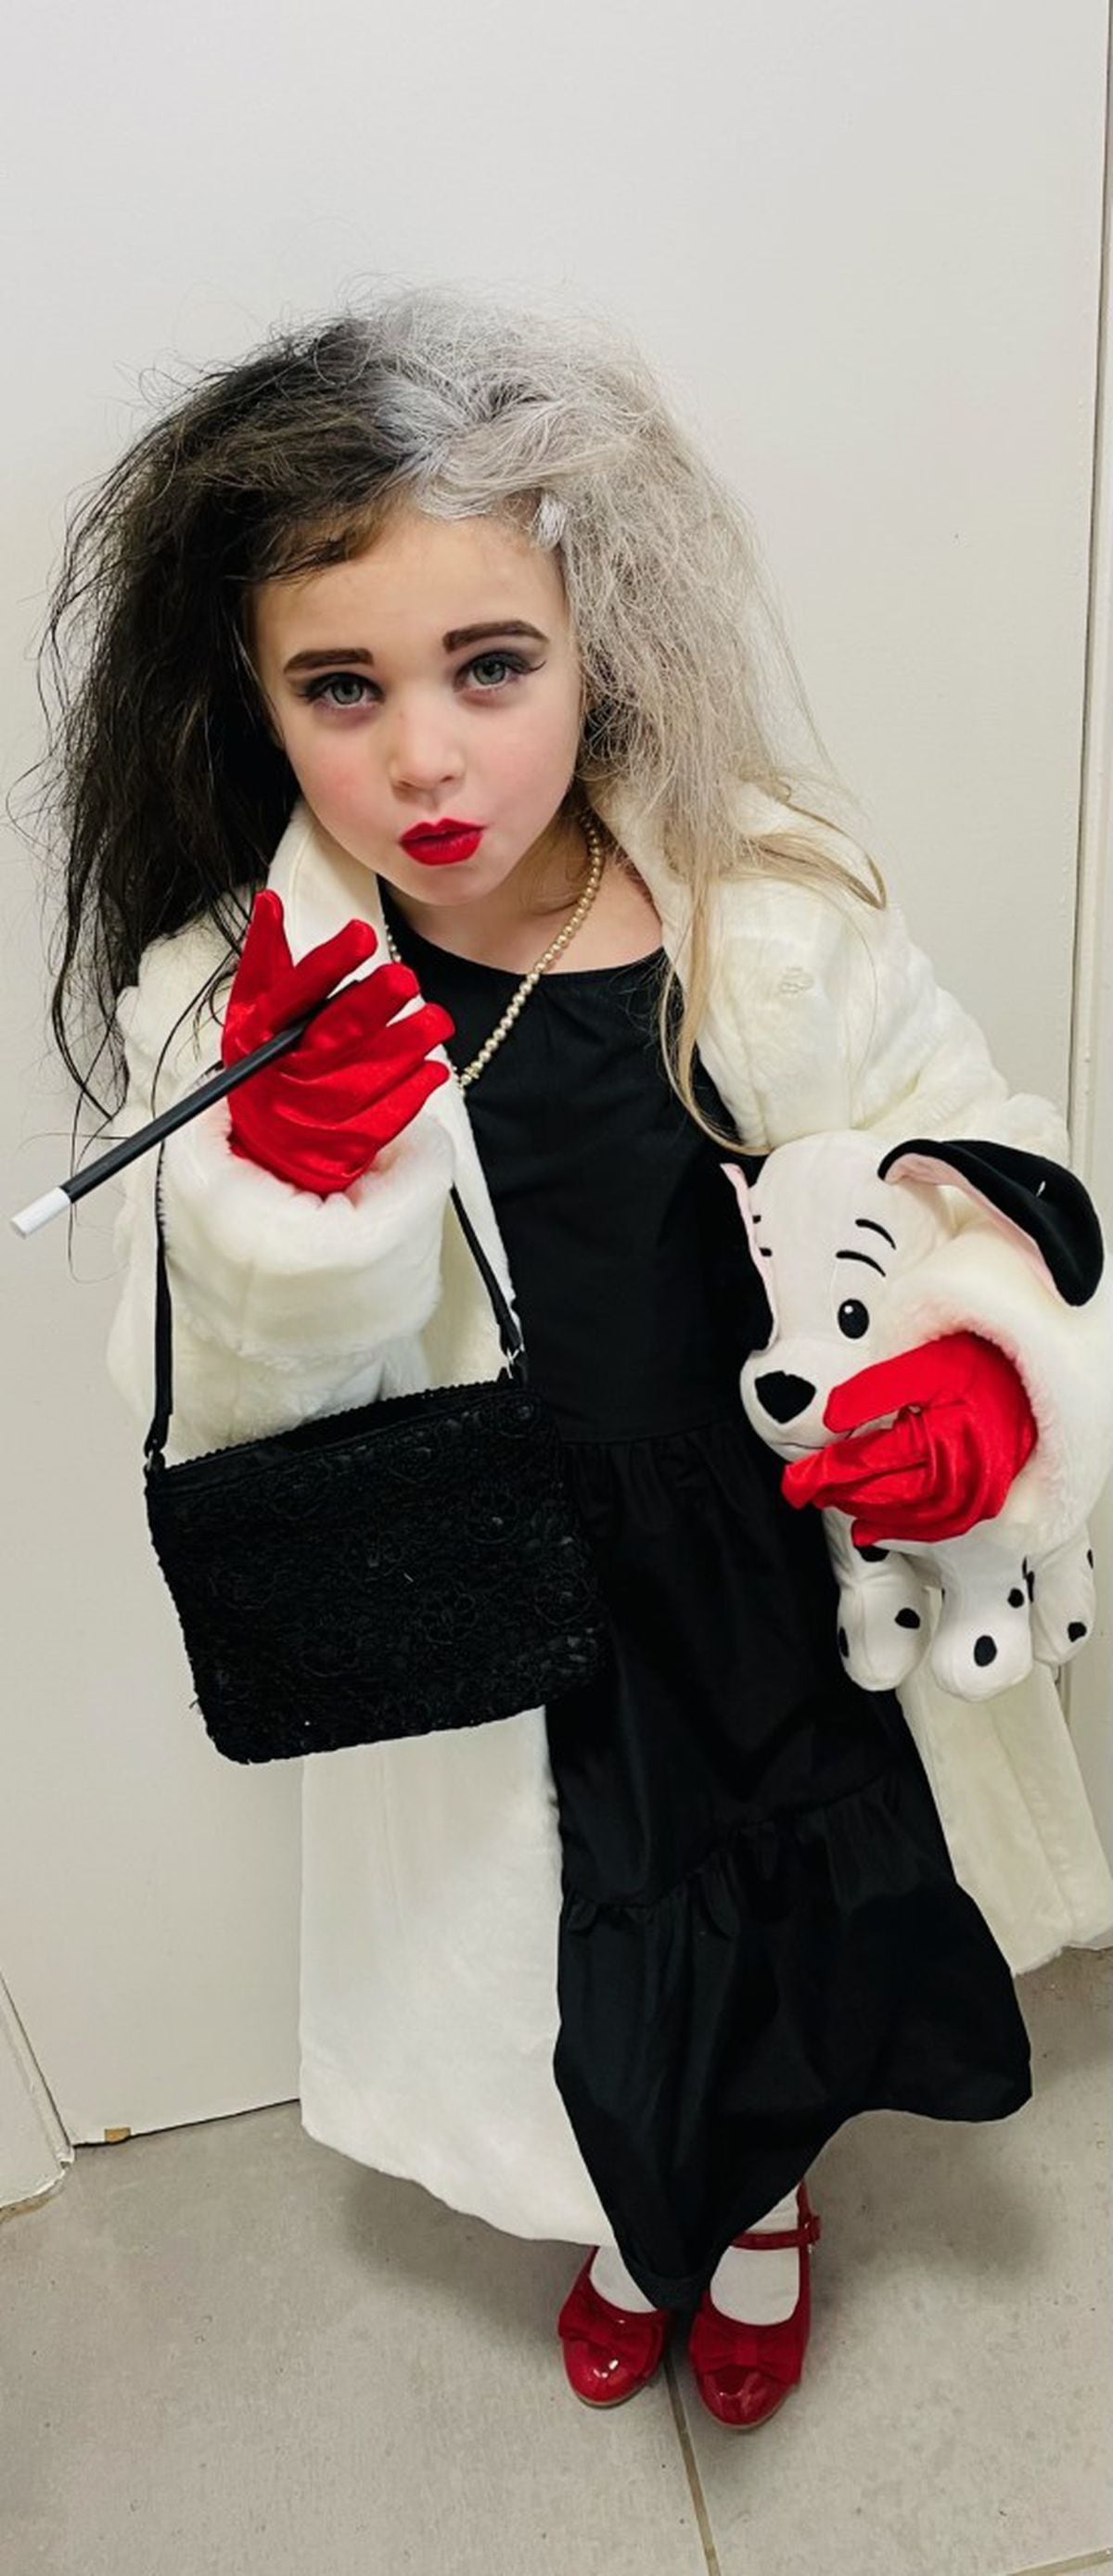 Felicity Williams, aged 6, as Cruella De Vil